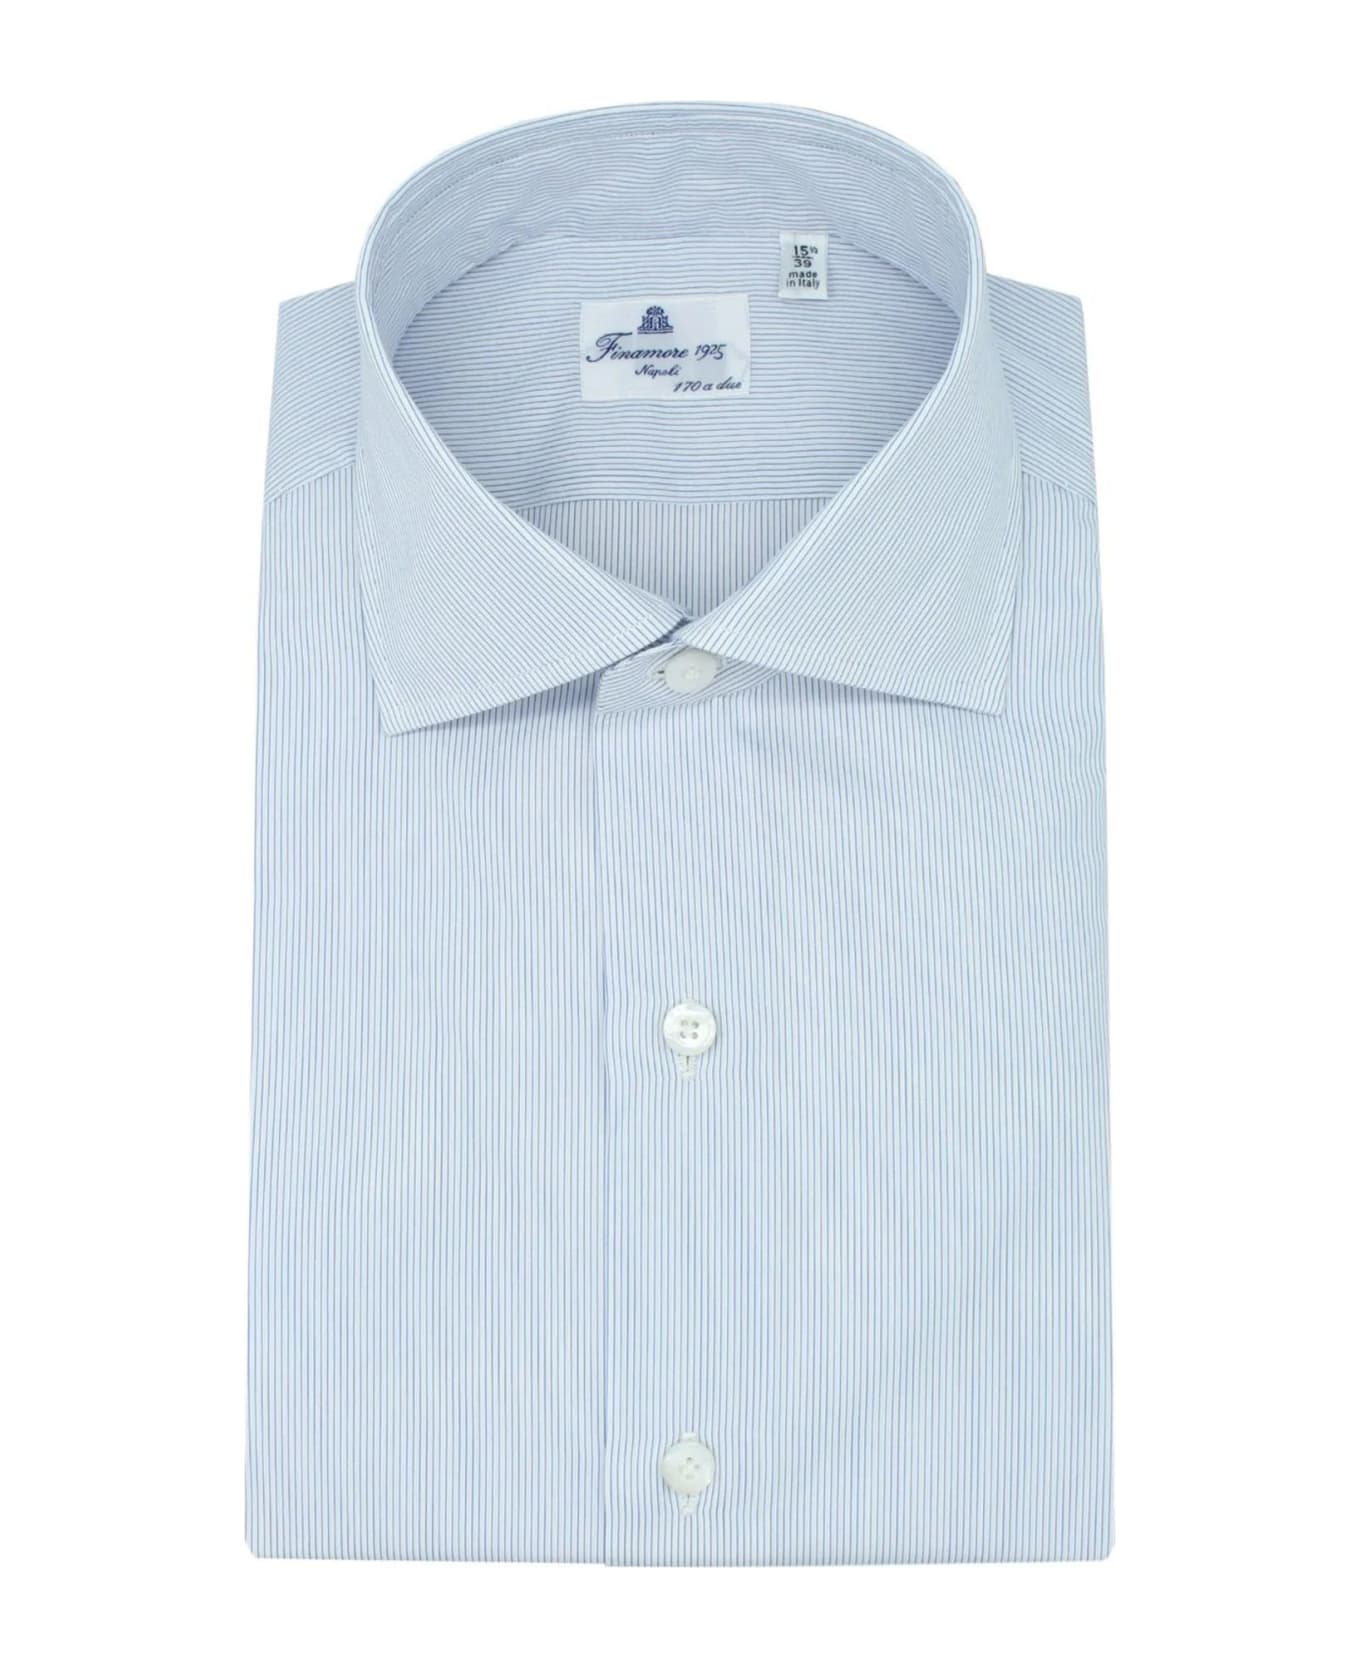 Finamore White And Blue Striped Shirt - Rigato シャツ